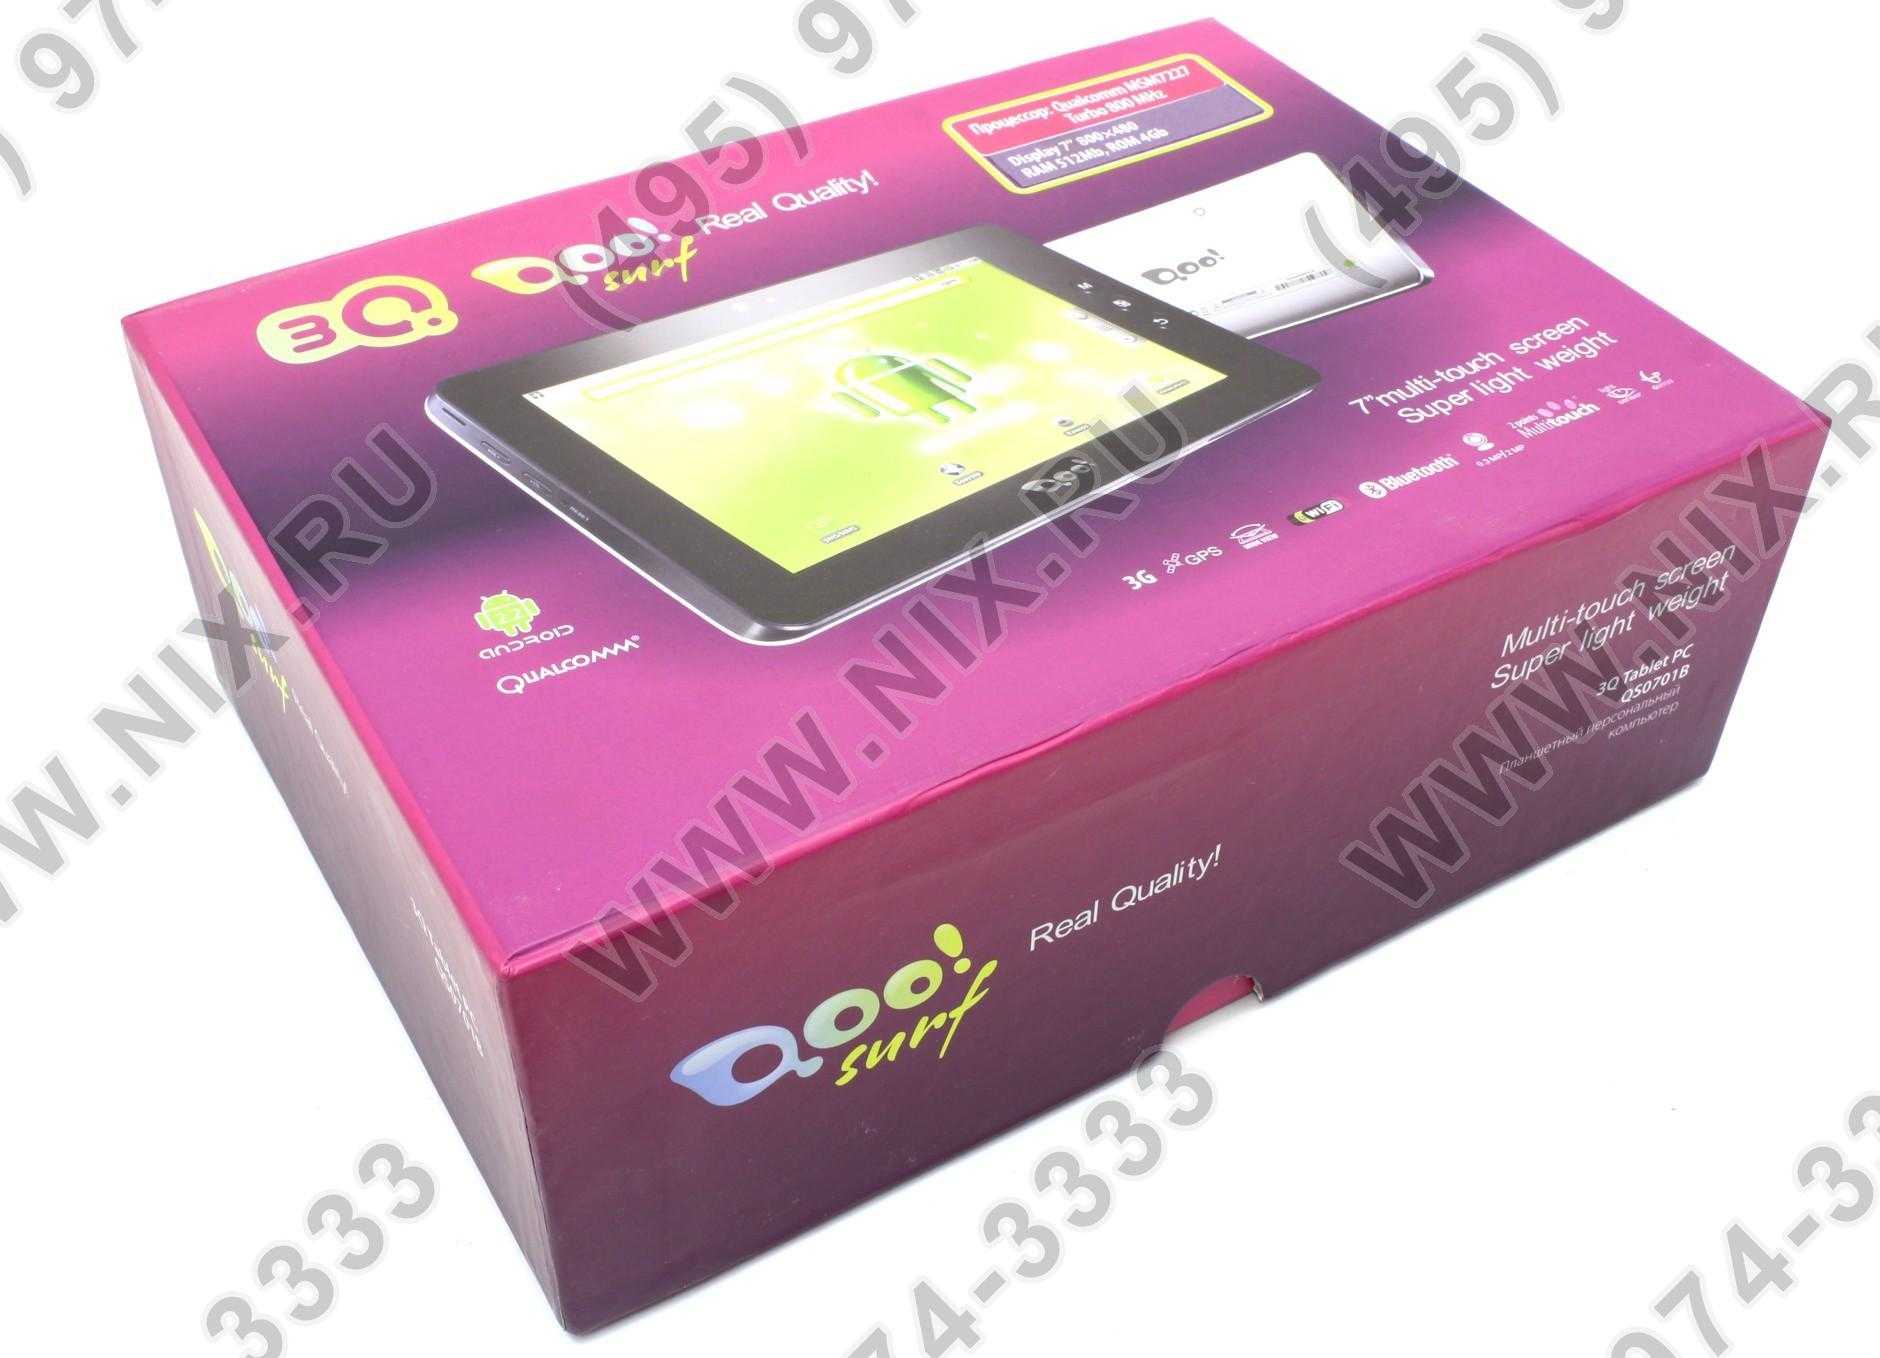 3q qoo surf tablet pc ts1003t 1gb ddr2 16gb ssd - купить , скидки, цена, отзывы, обзор, характеристики - планшеты